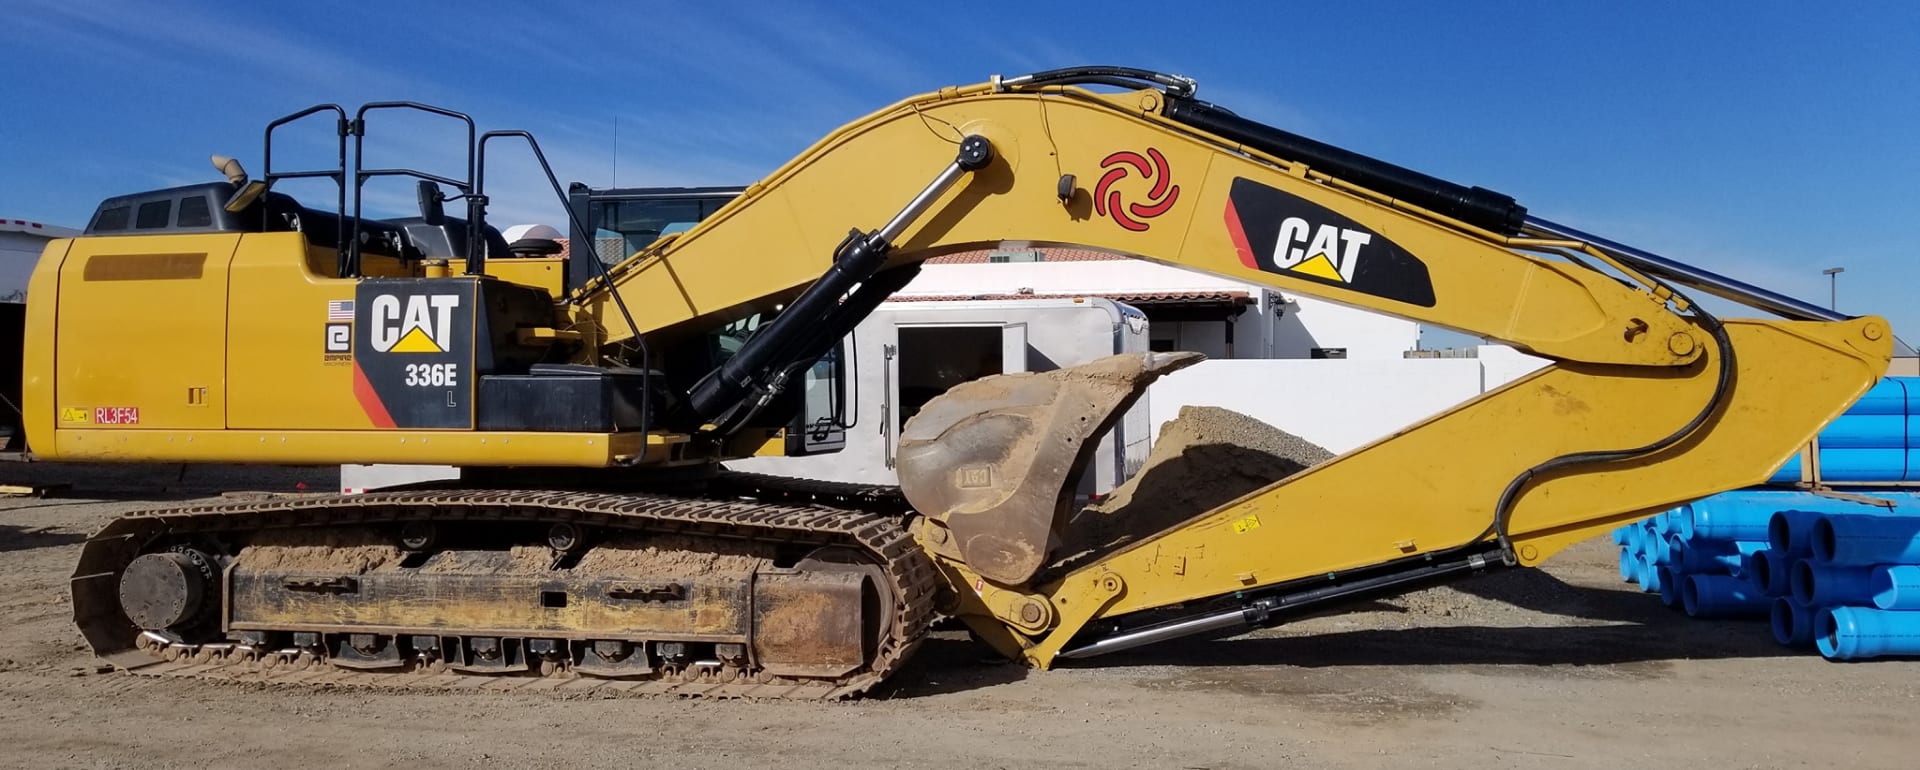 Taylor Engineering excavator on a job site.